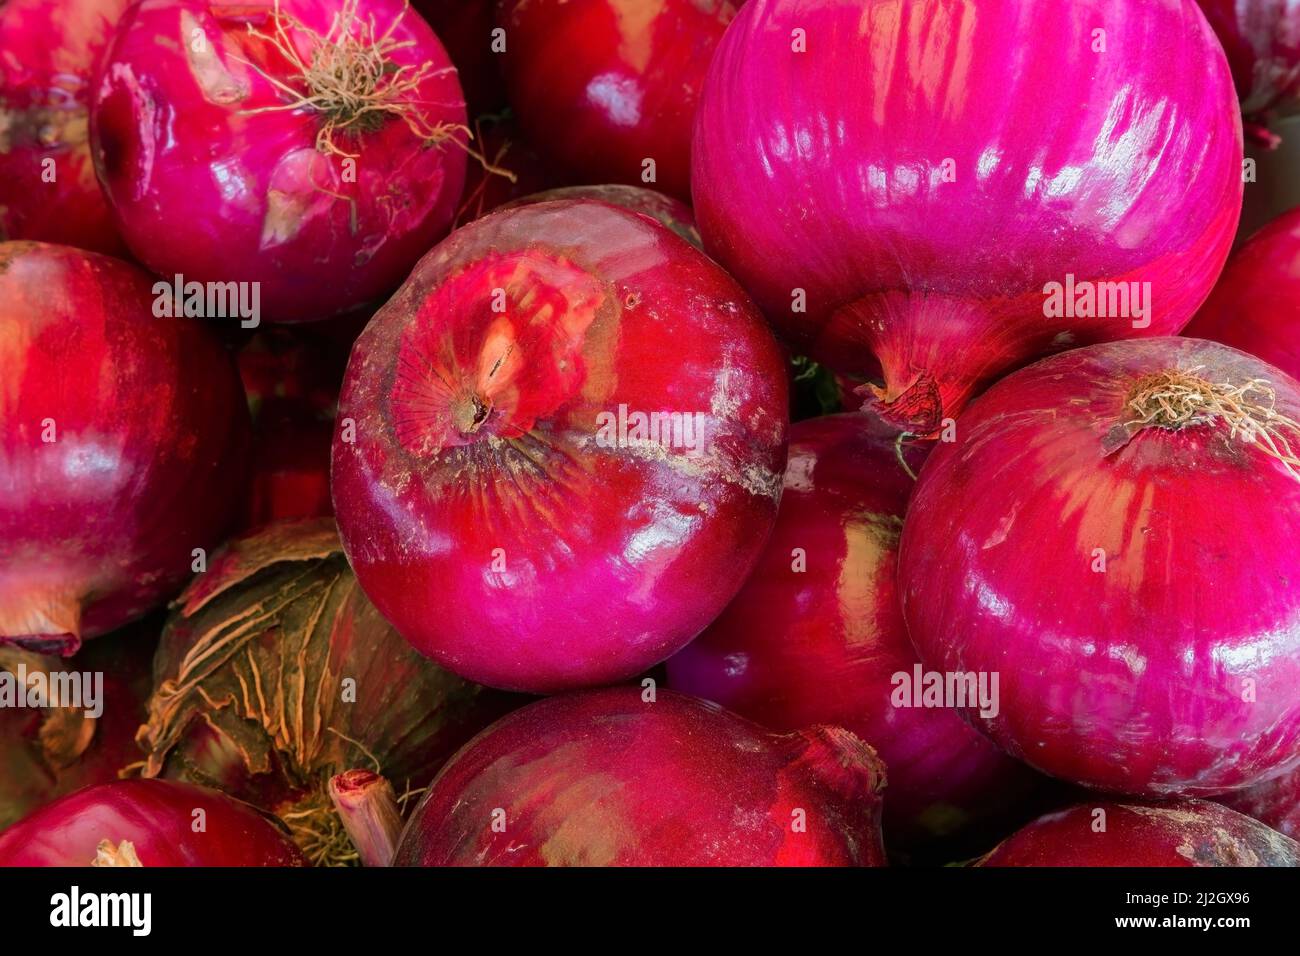 Allium cepa - Red Onions. Stock Photo